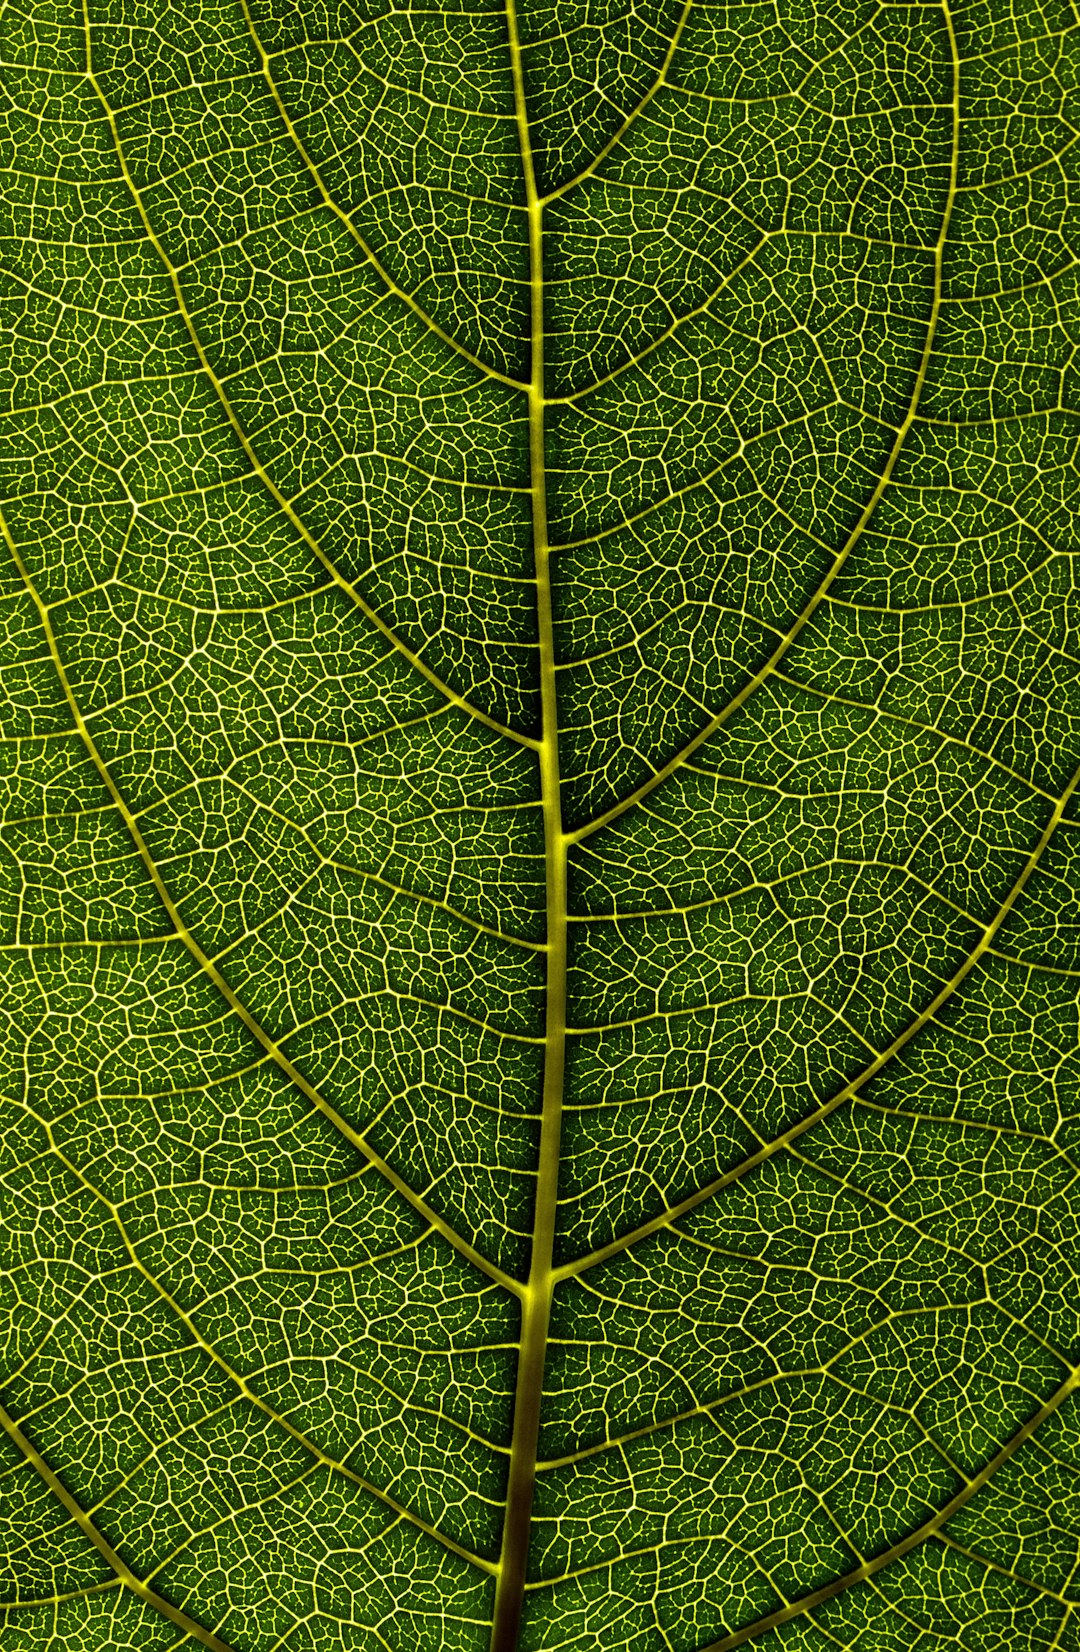 Leaf Texture Pictures | Download Free Images on Unsplash